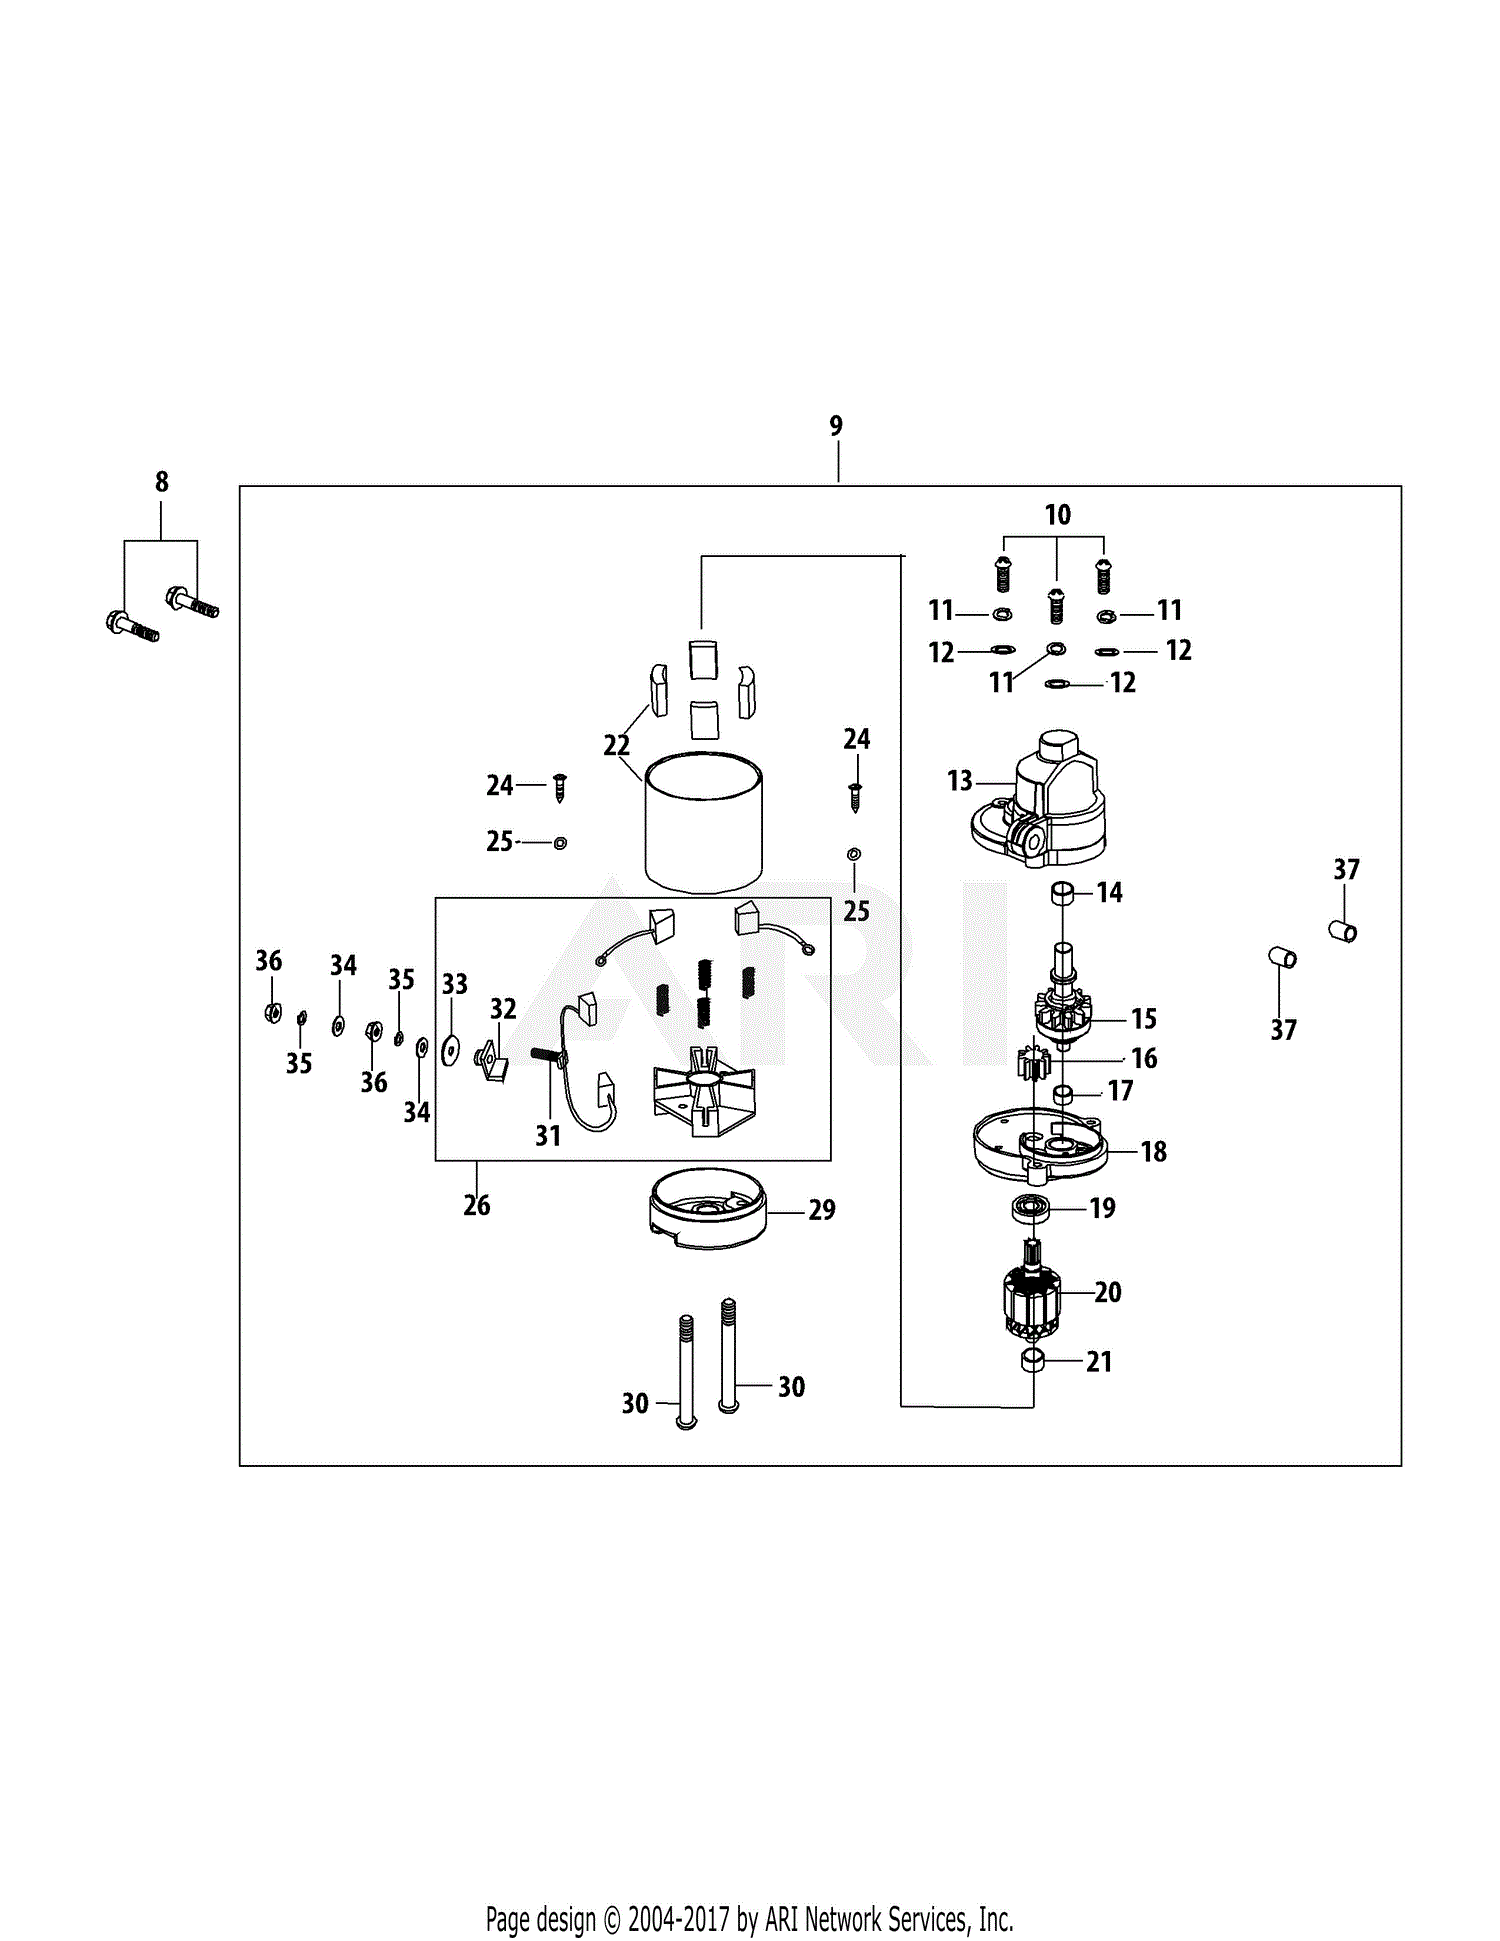 powermore engine 420cc wiring diagram